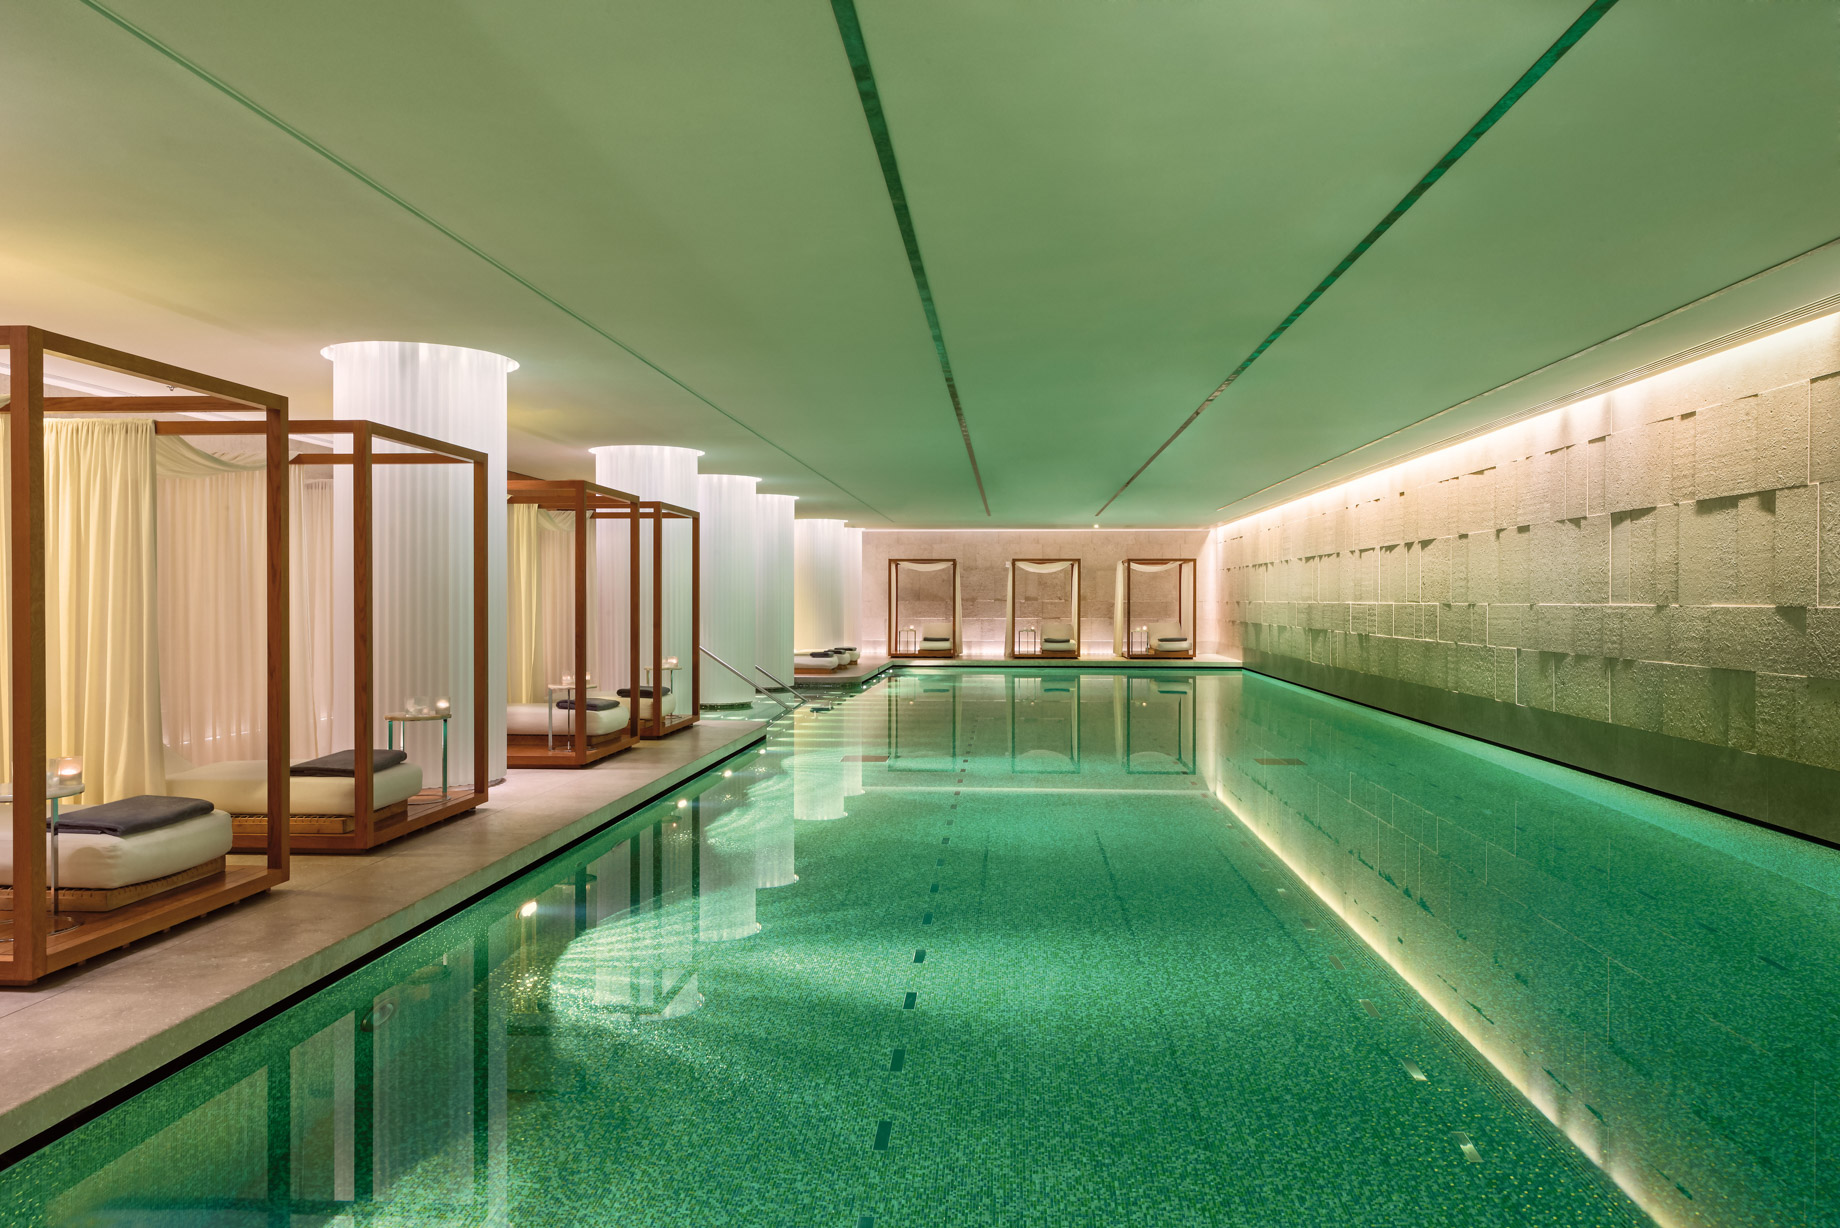 Bvlgari Hotel London – Knightsbridge, London, UK – Bvlgari Pool with Private Cabanas